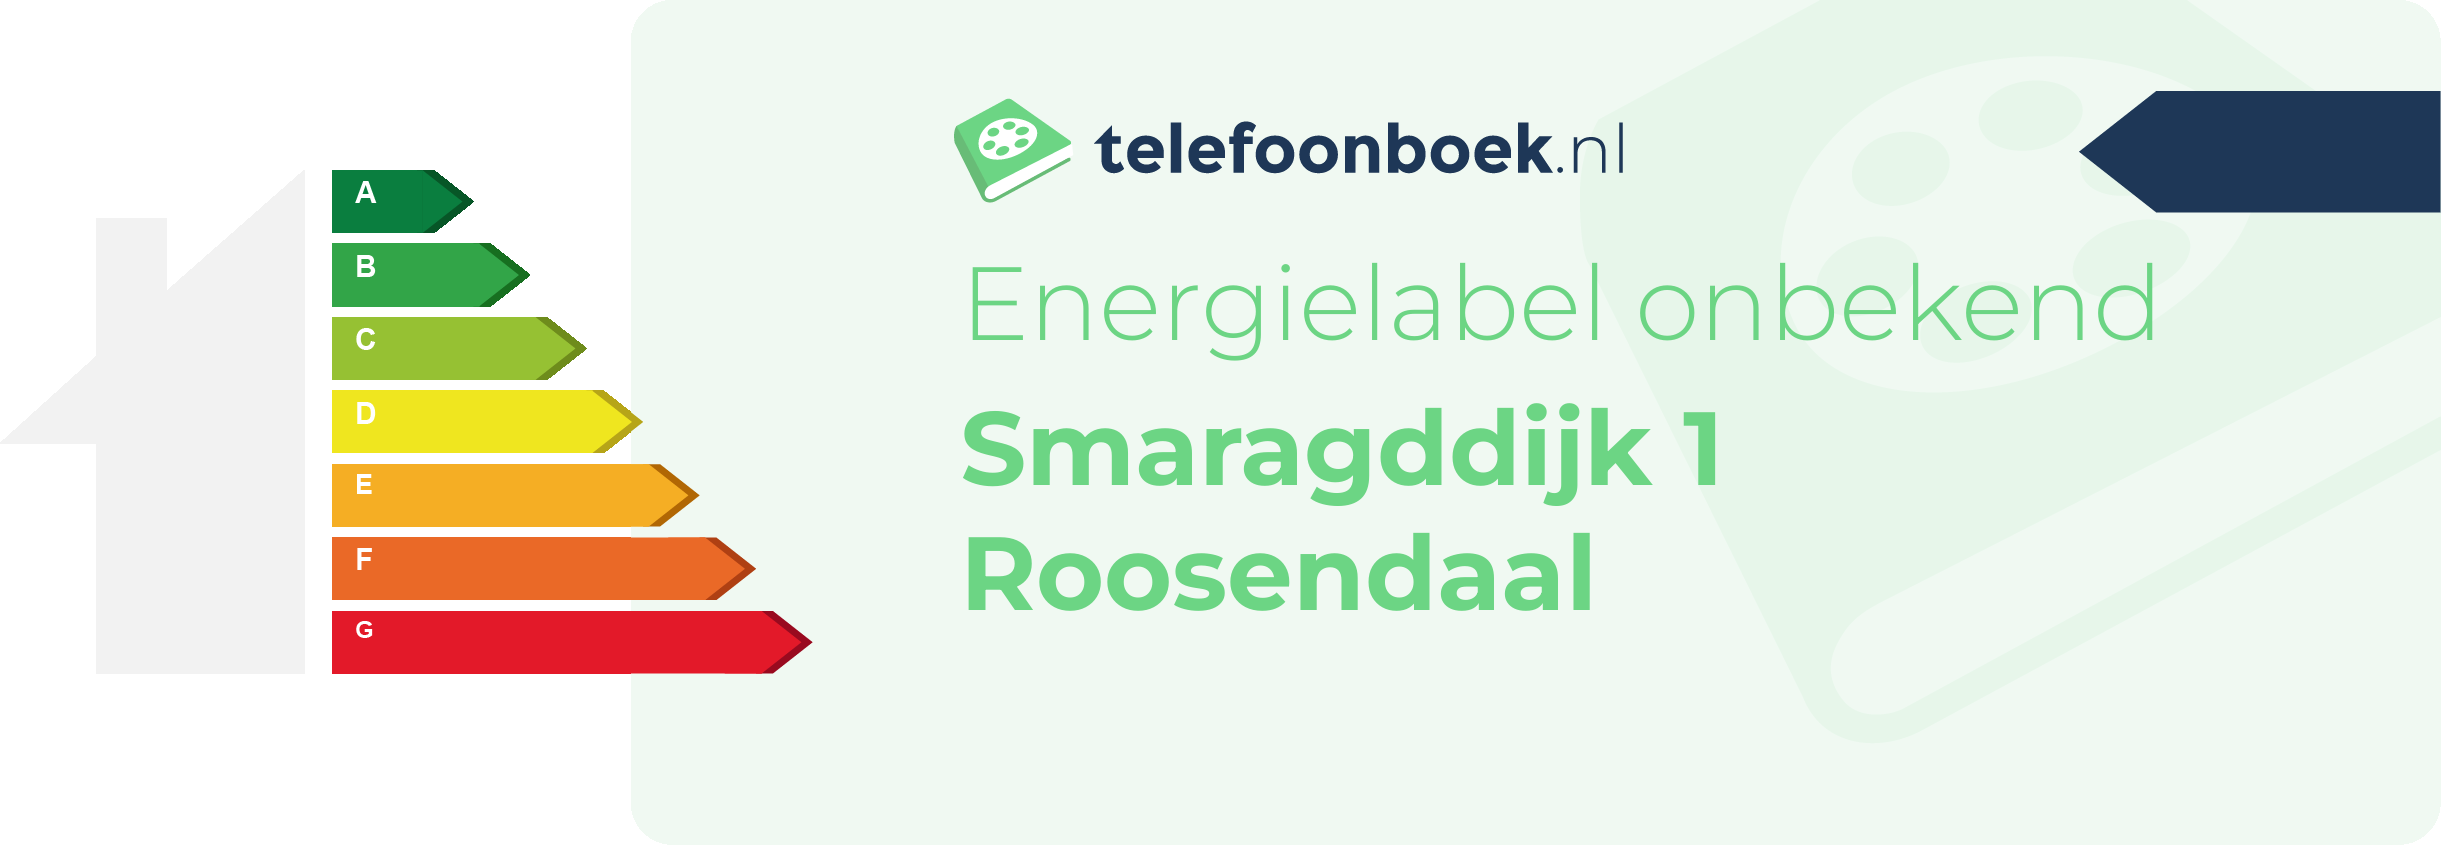 Energielabel Smaragddijk 1 Roosendaal